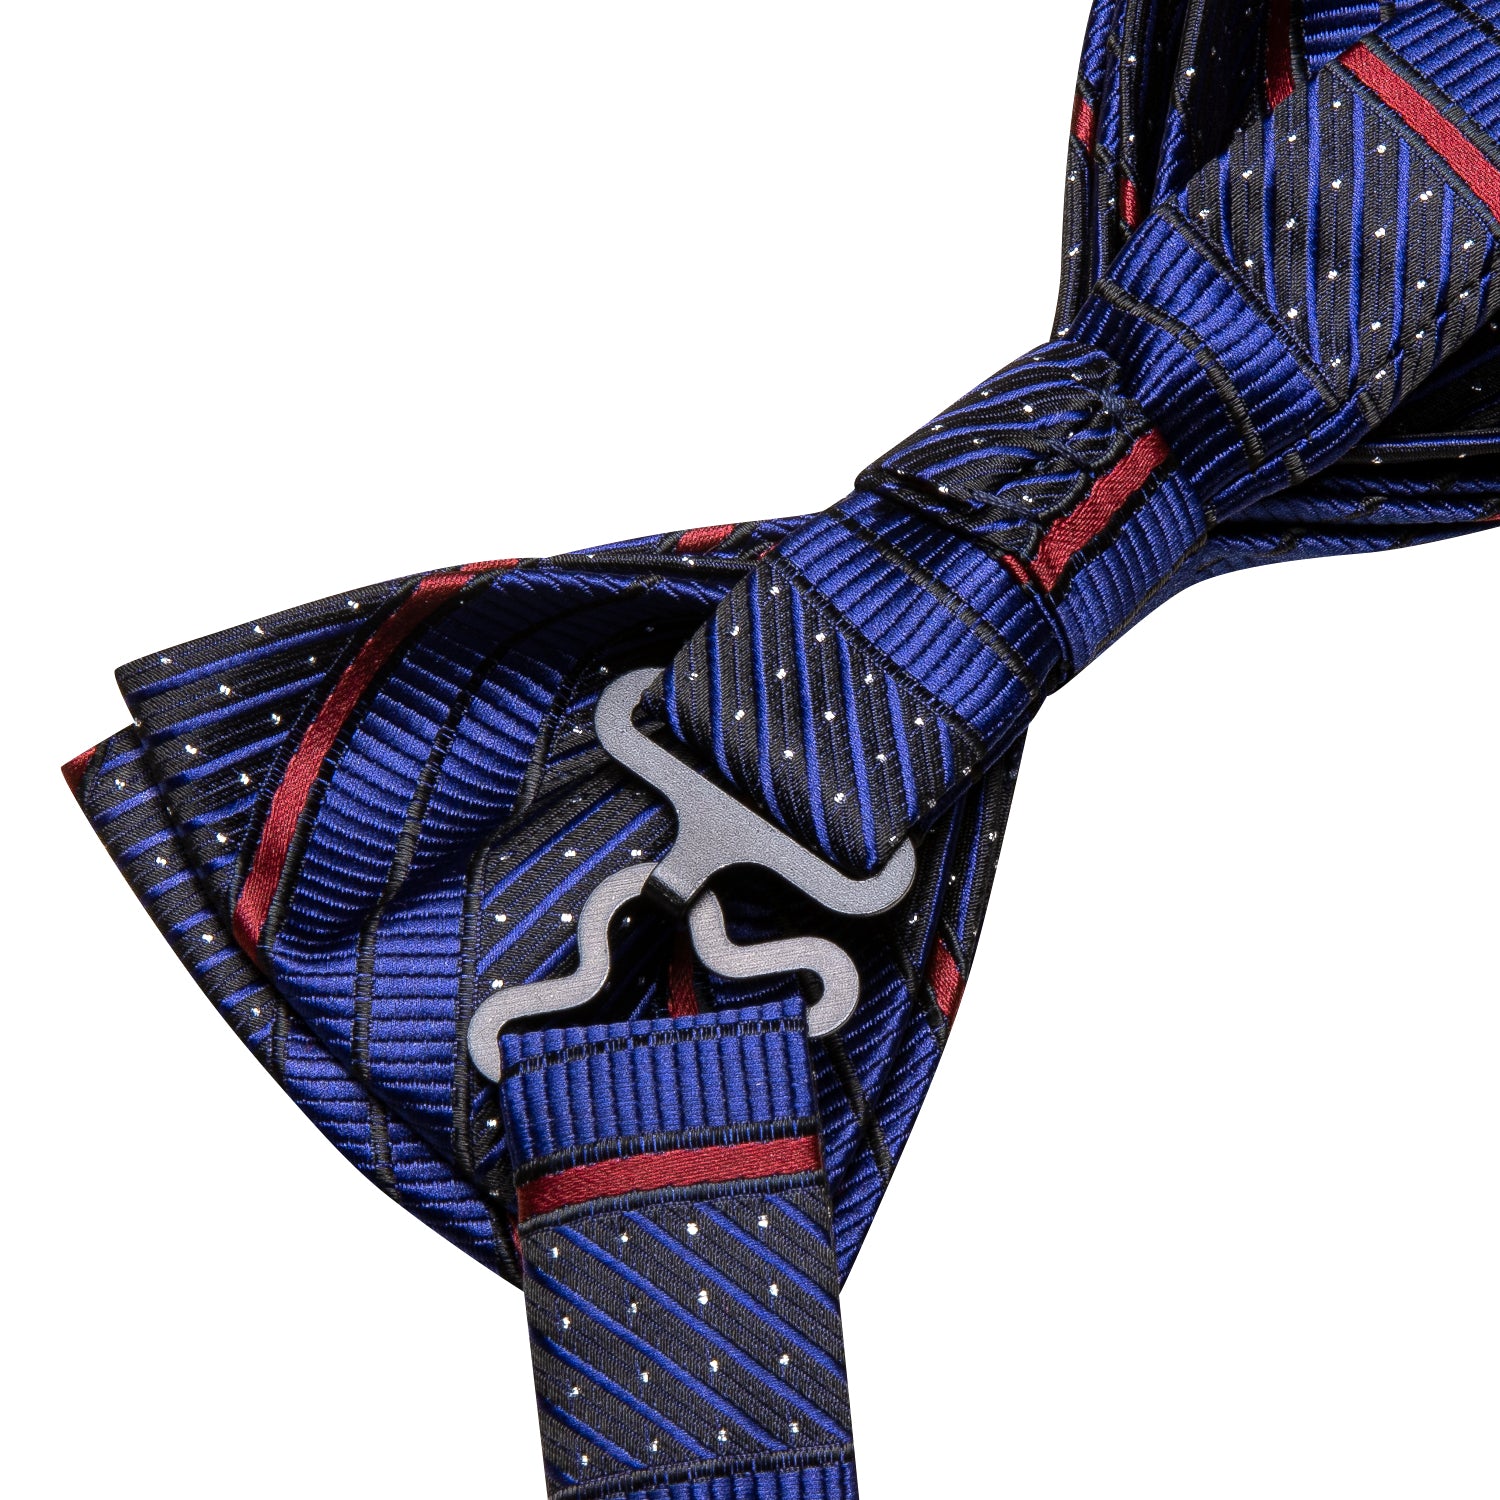 Hi-Tie Blue Red Striped Pre-tied Bow Tie Hanky Cufflinks Set